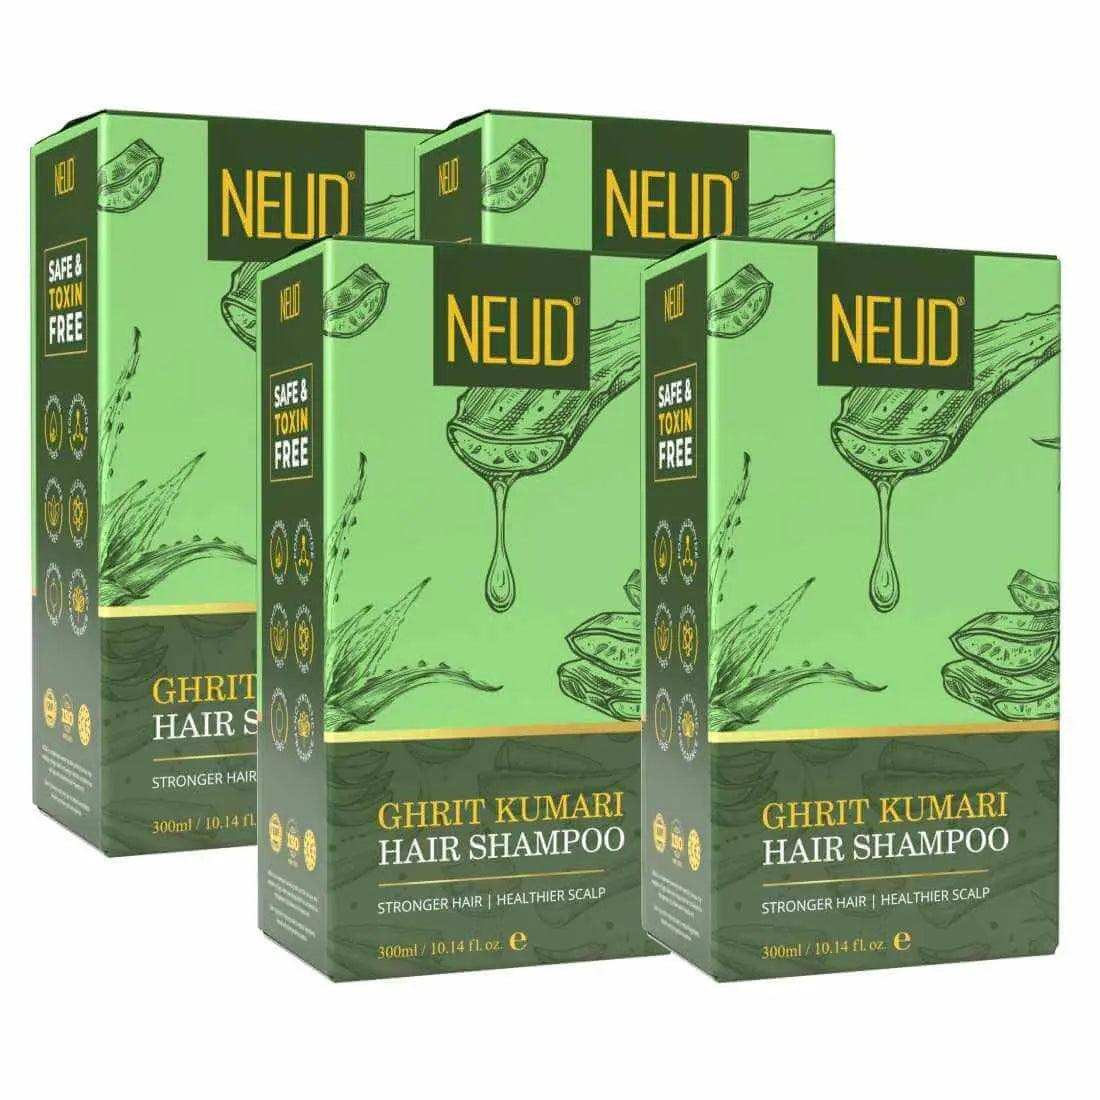 NEUD Premium Ghrit Kumari Hair Shampoo for Men & Women - 300 ml 9559682306654